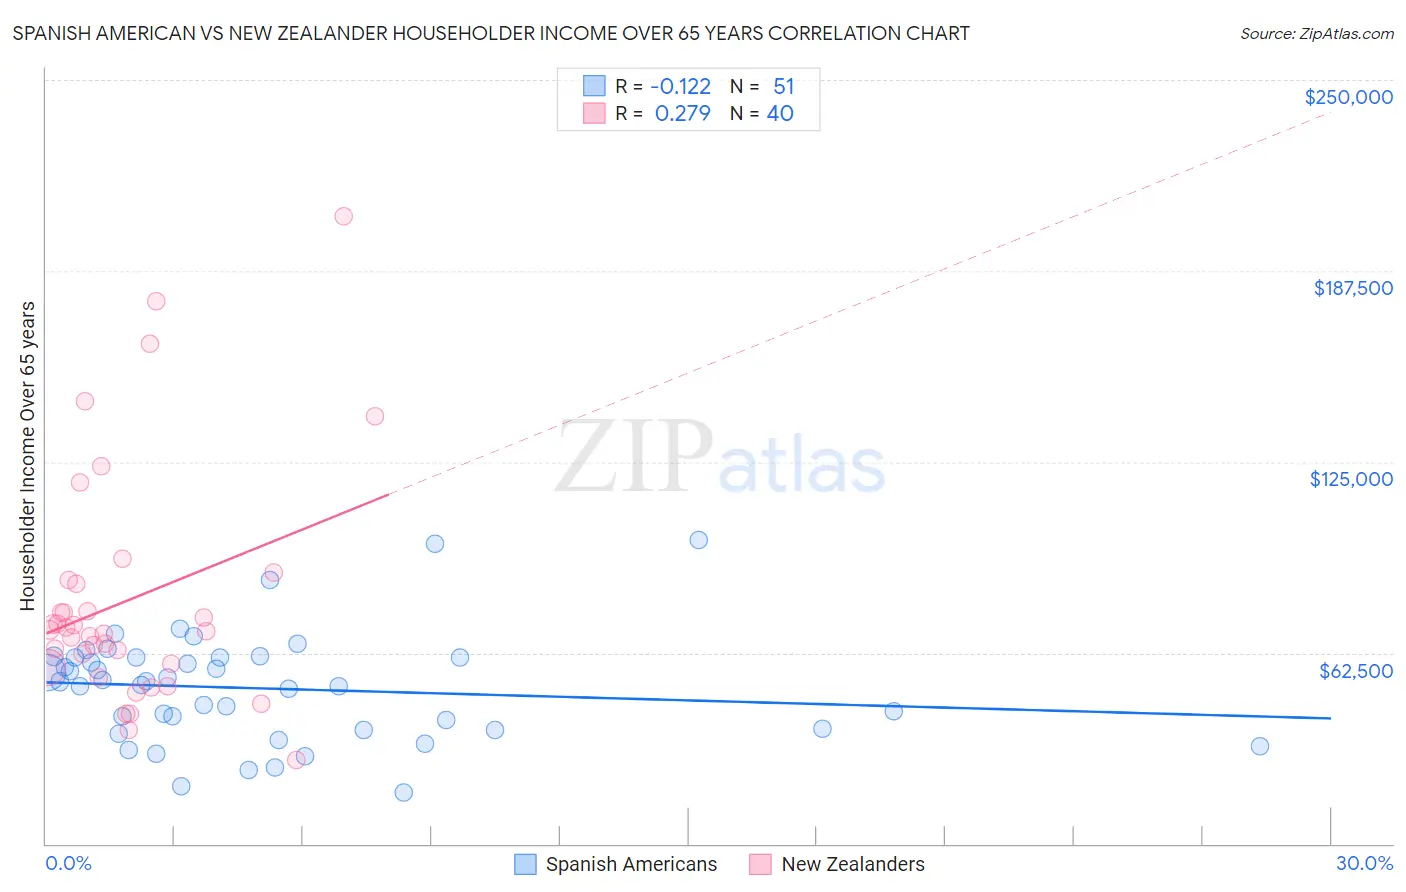 Spanish American vs New Zealander Householder Income Over 65 years